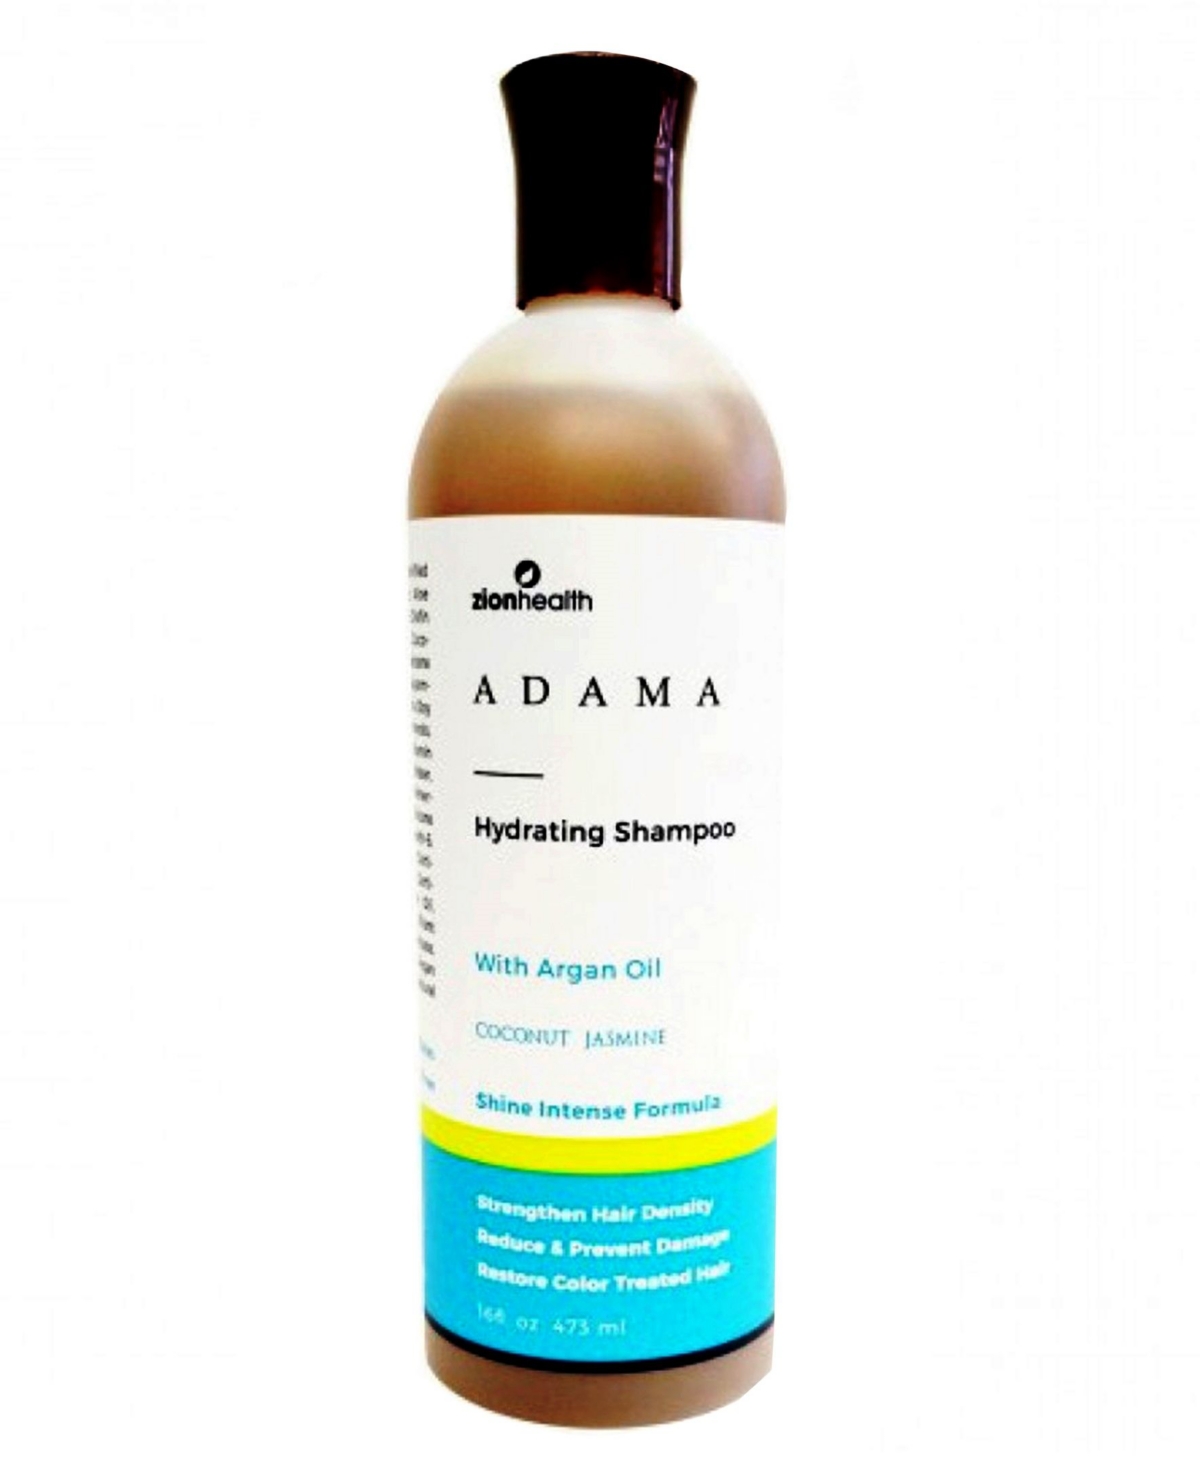 Coconut Jasmine Hydrating Shampoo with Argan Oil, 16 oz - No COLOR